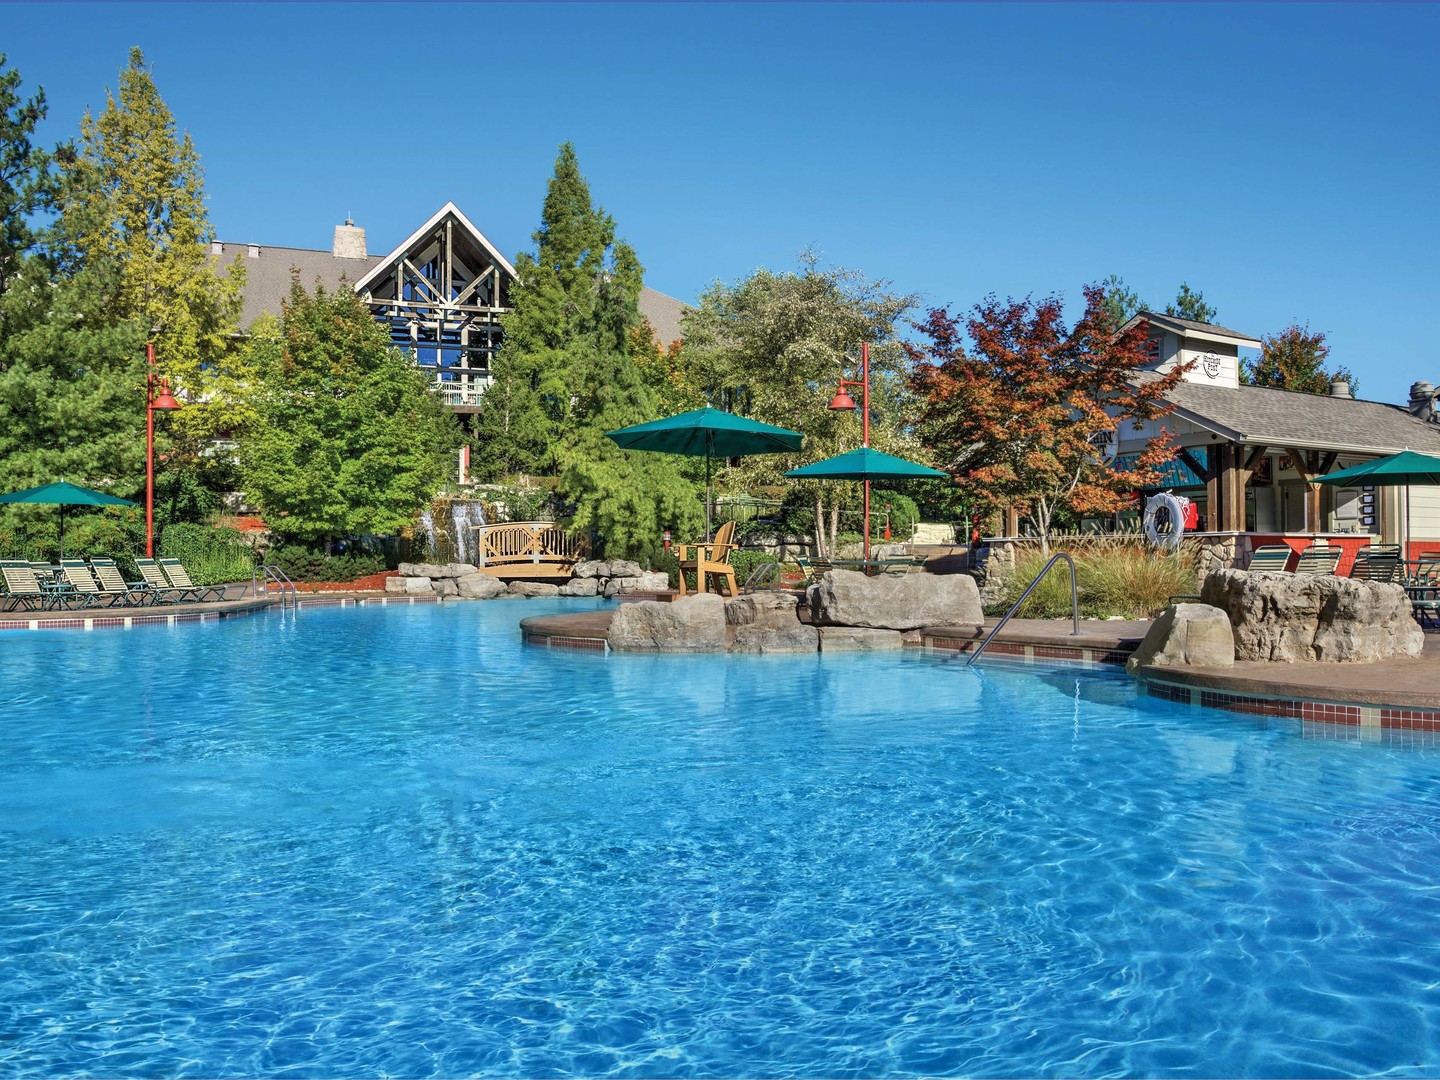 Marriott's Willow Ridge Lodge Cascades Pool Area. Marriott's Willow Ridge Lodge is located in Branson, Missouri United States.